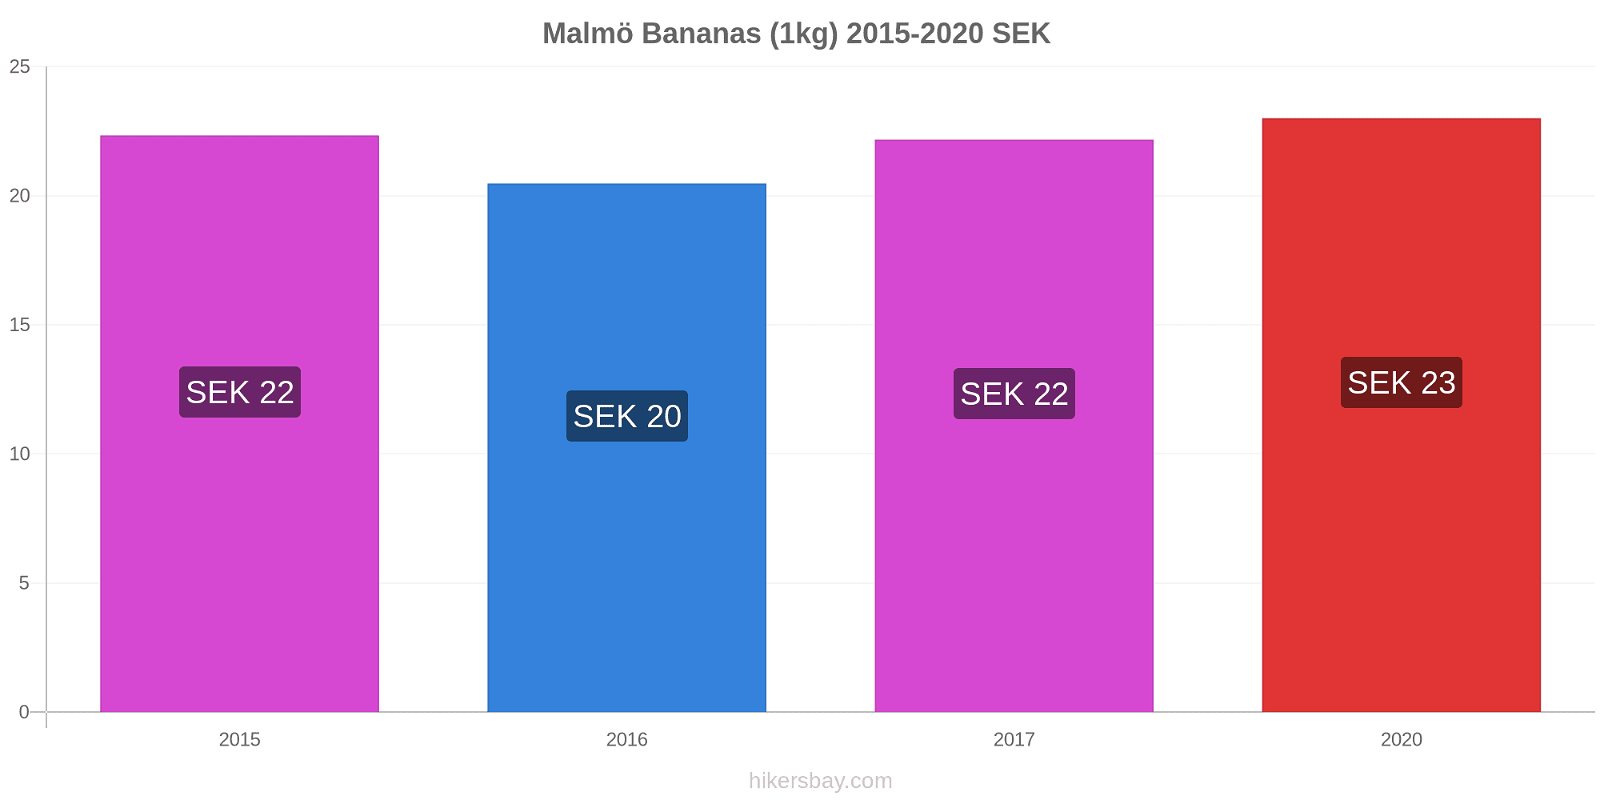 Malmö price changes Bananas (1kg) hikersbay.com